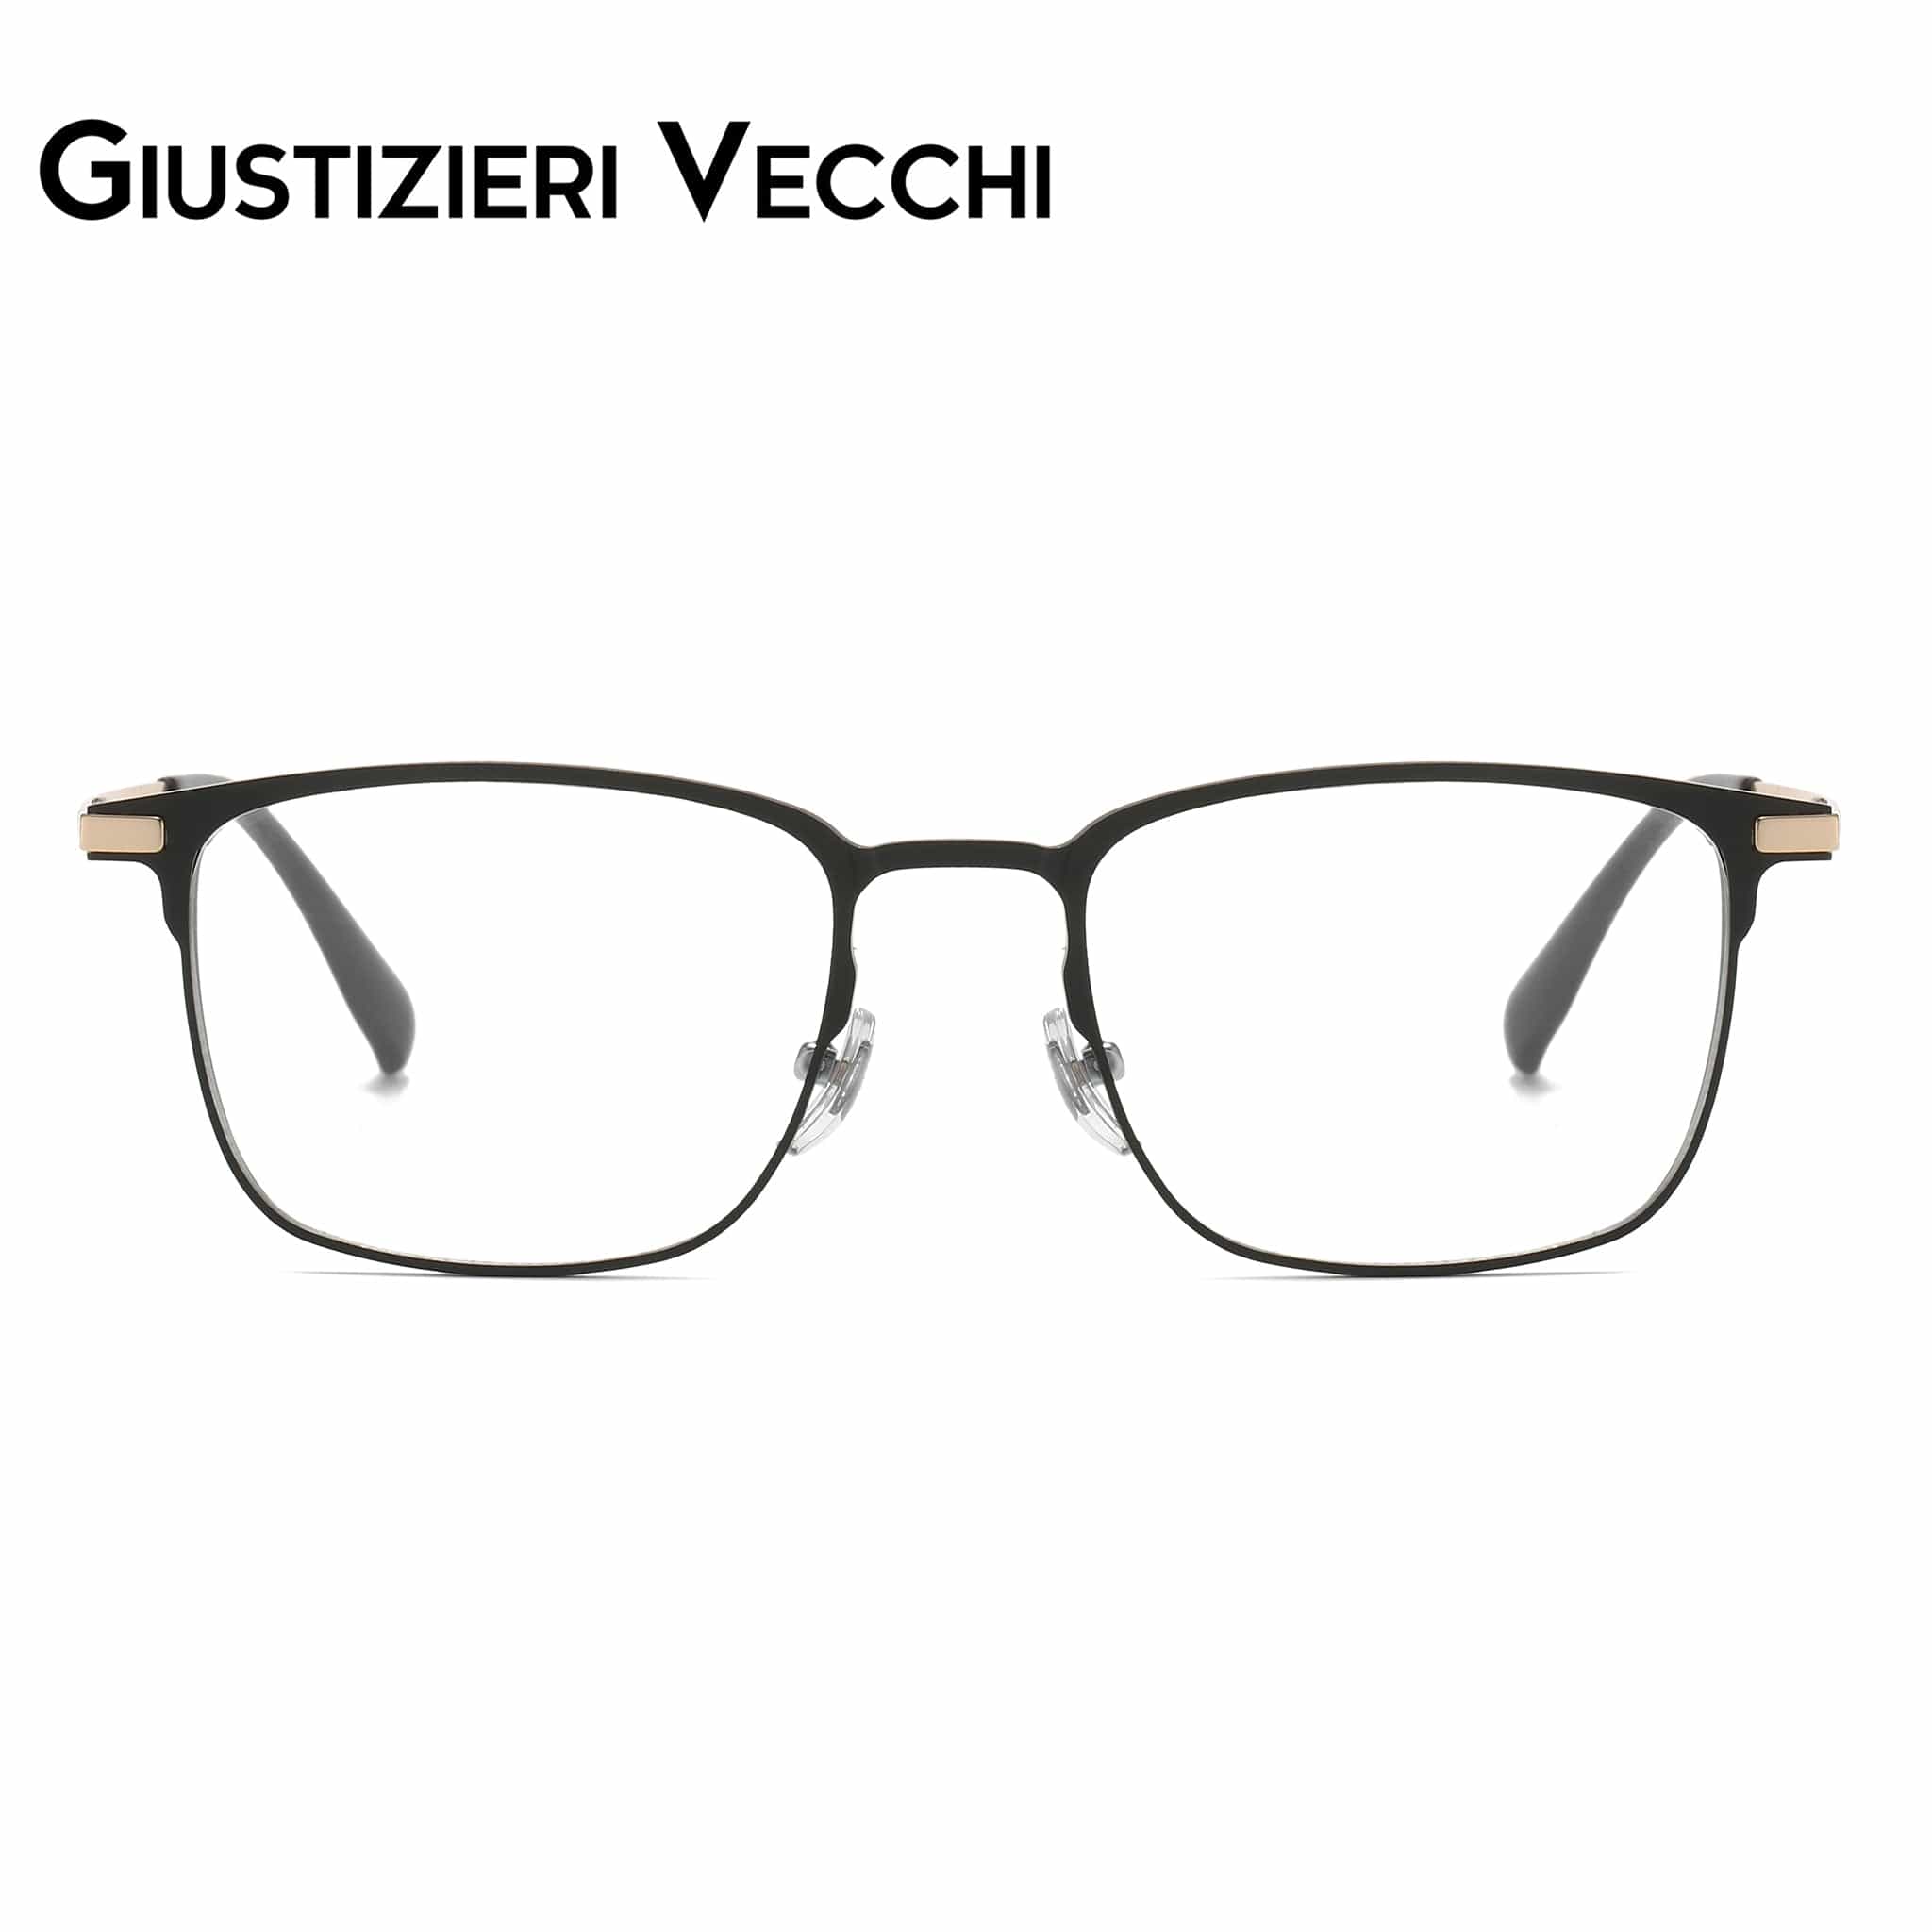 GIUSTIZIERI VECCHI Eyeglasses Medium / Black with Rose Gold Nightfall Duo